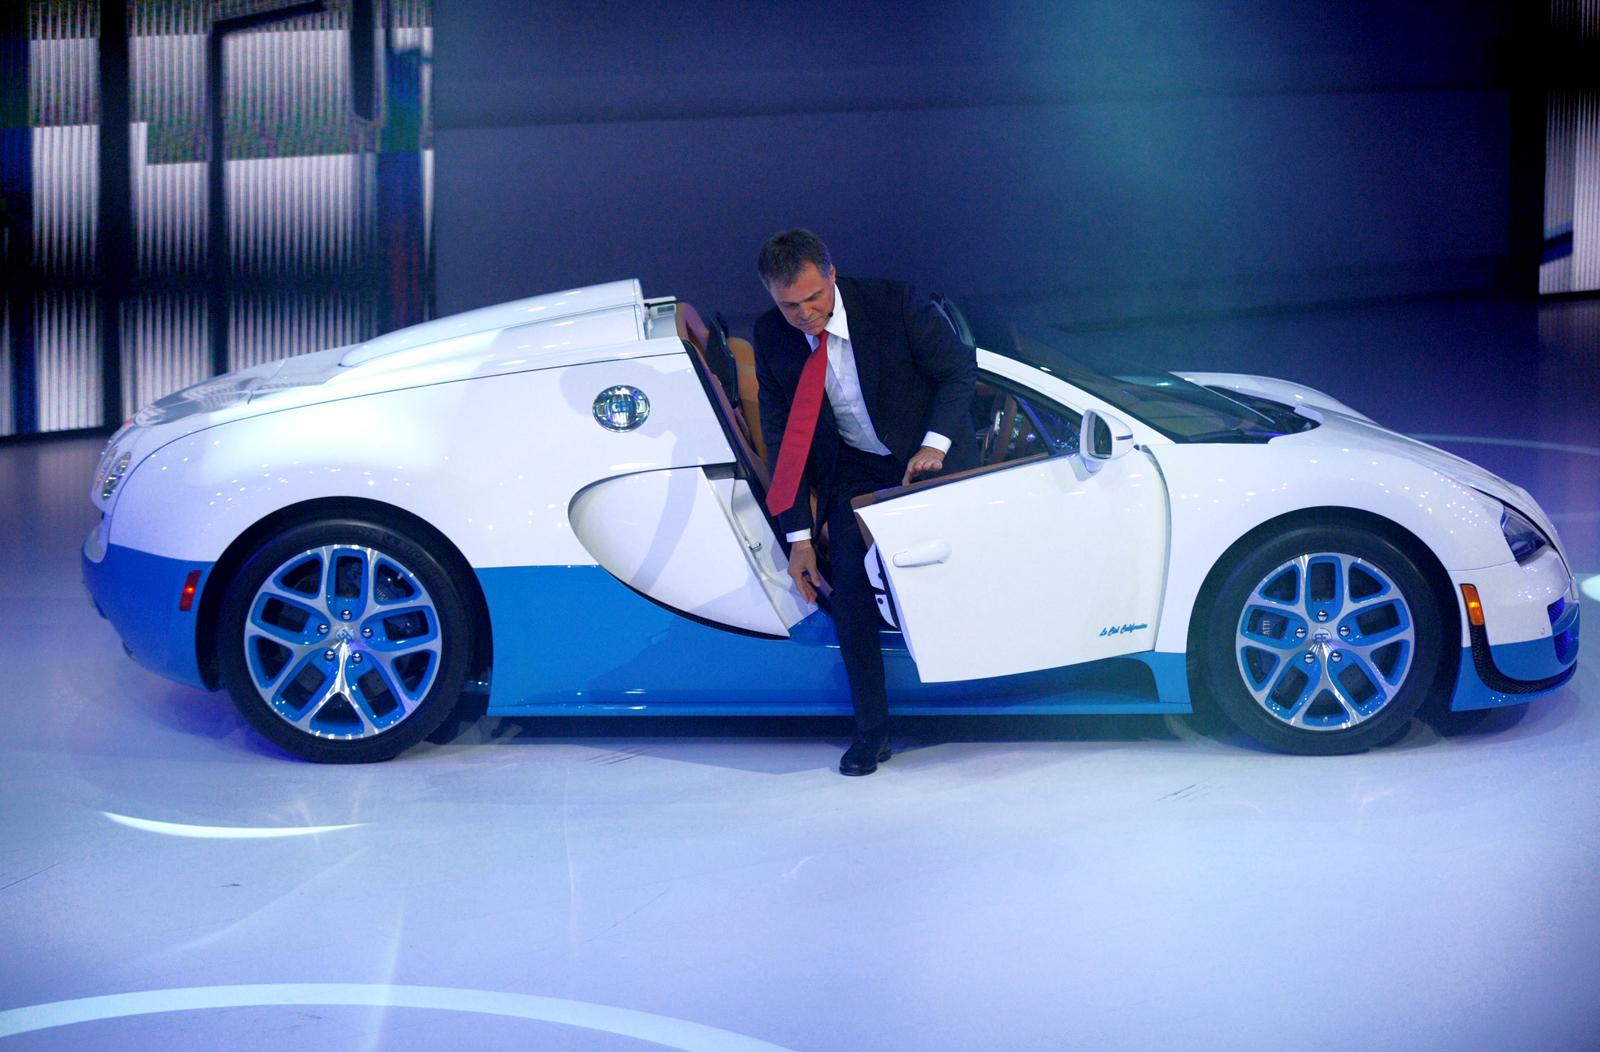 VW-chef gör ståtlig entré i Bugatti Veyron. Foto: SCANPIX